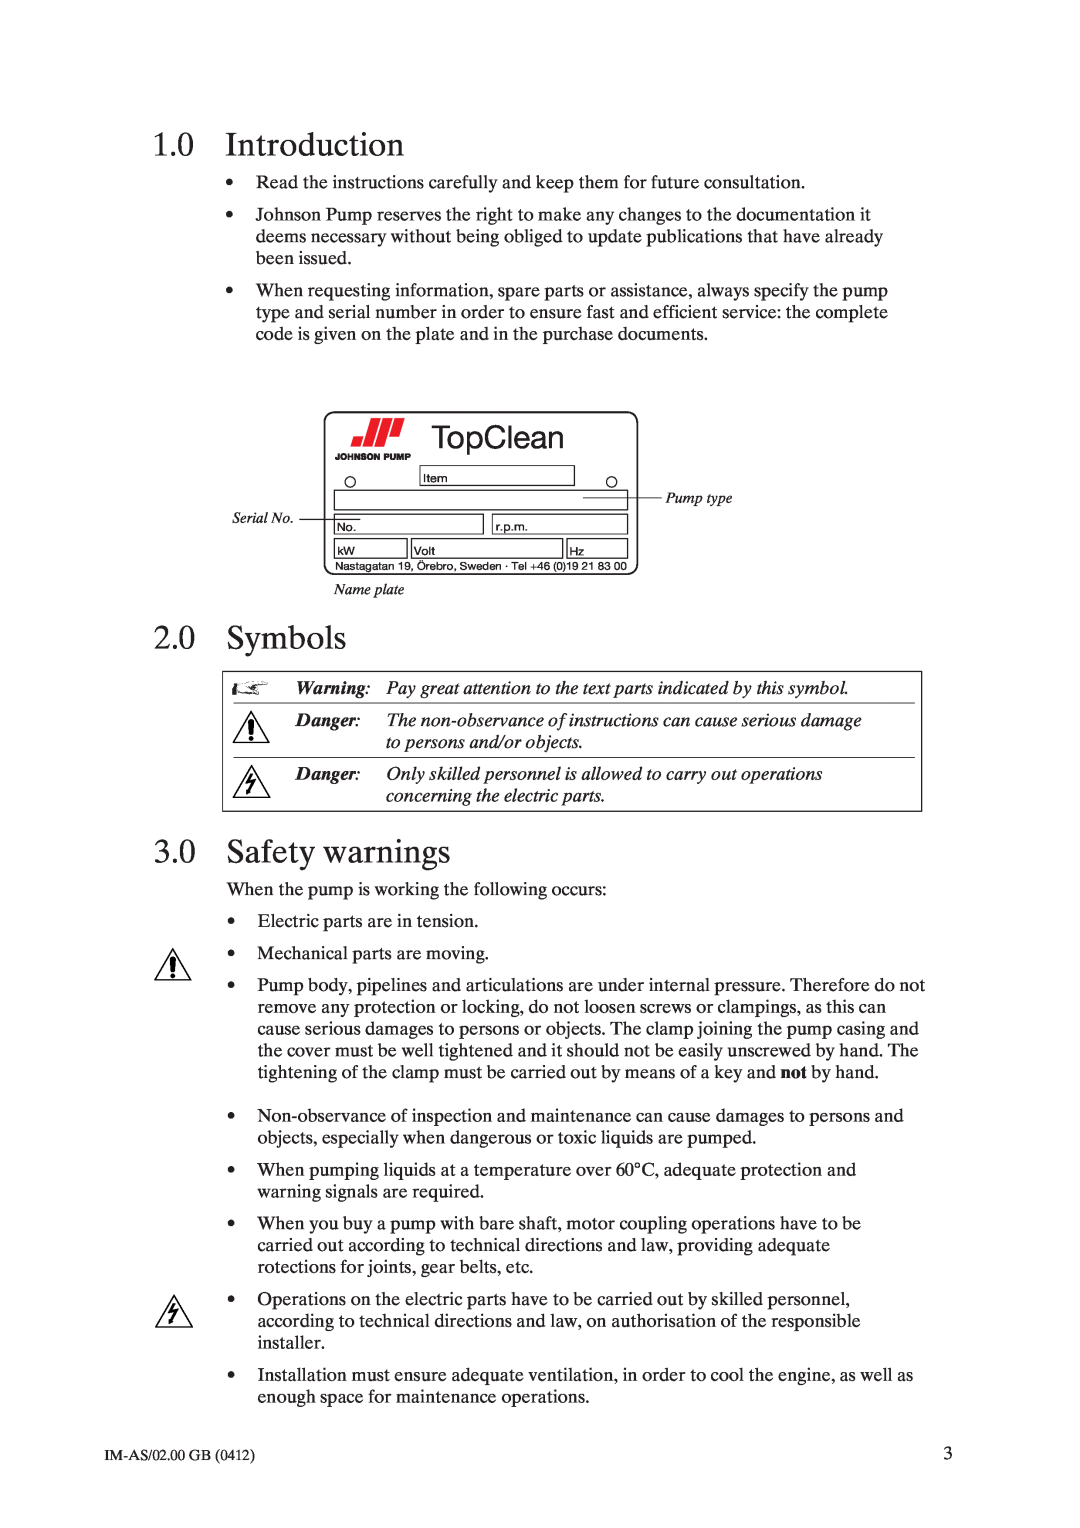 Johnson Controls AS instruction manual 1.0Introduction, Symbols, Safety warnings, TopClean 